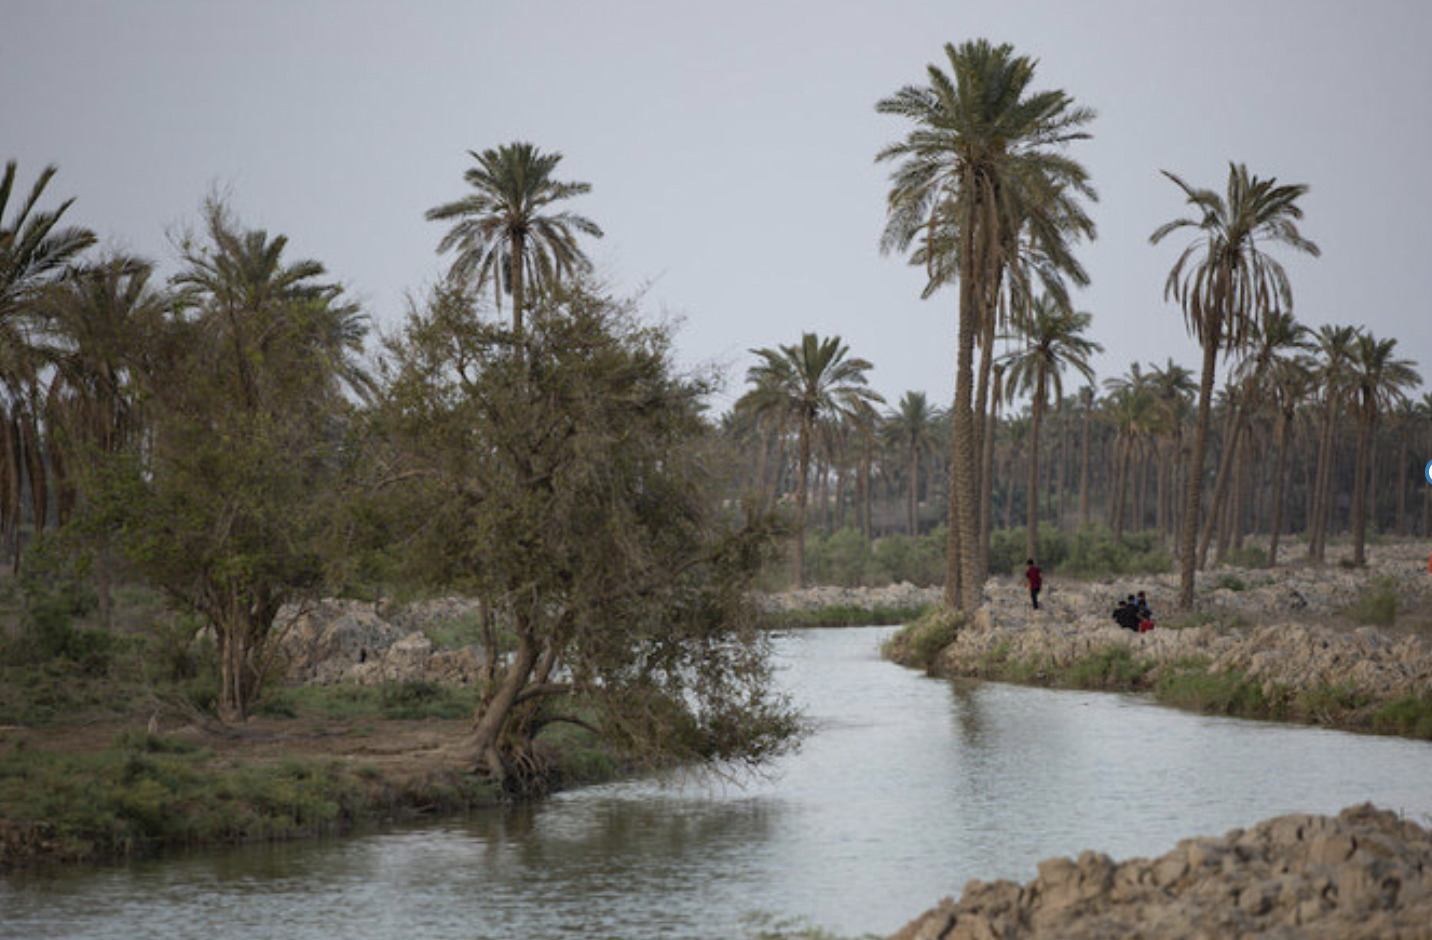 Syria fishermen despair at water loss, river pollution